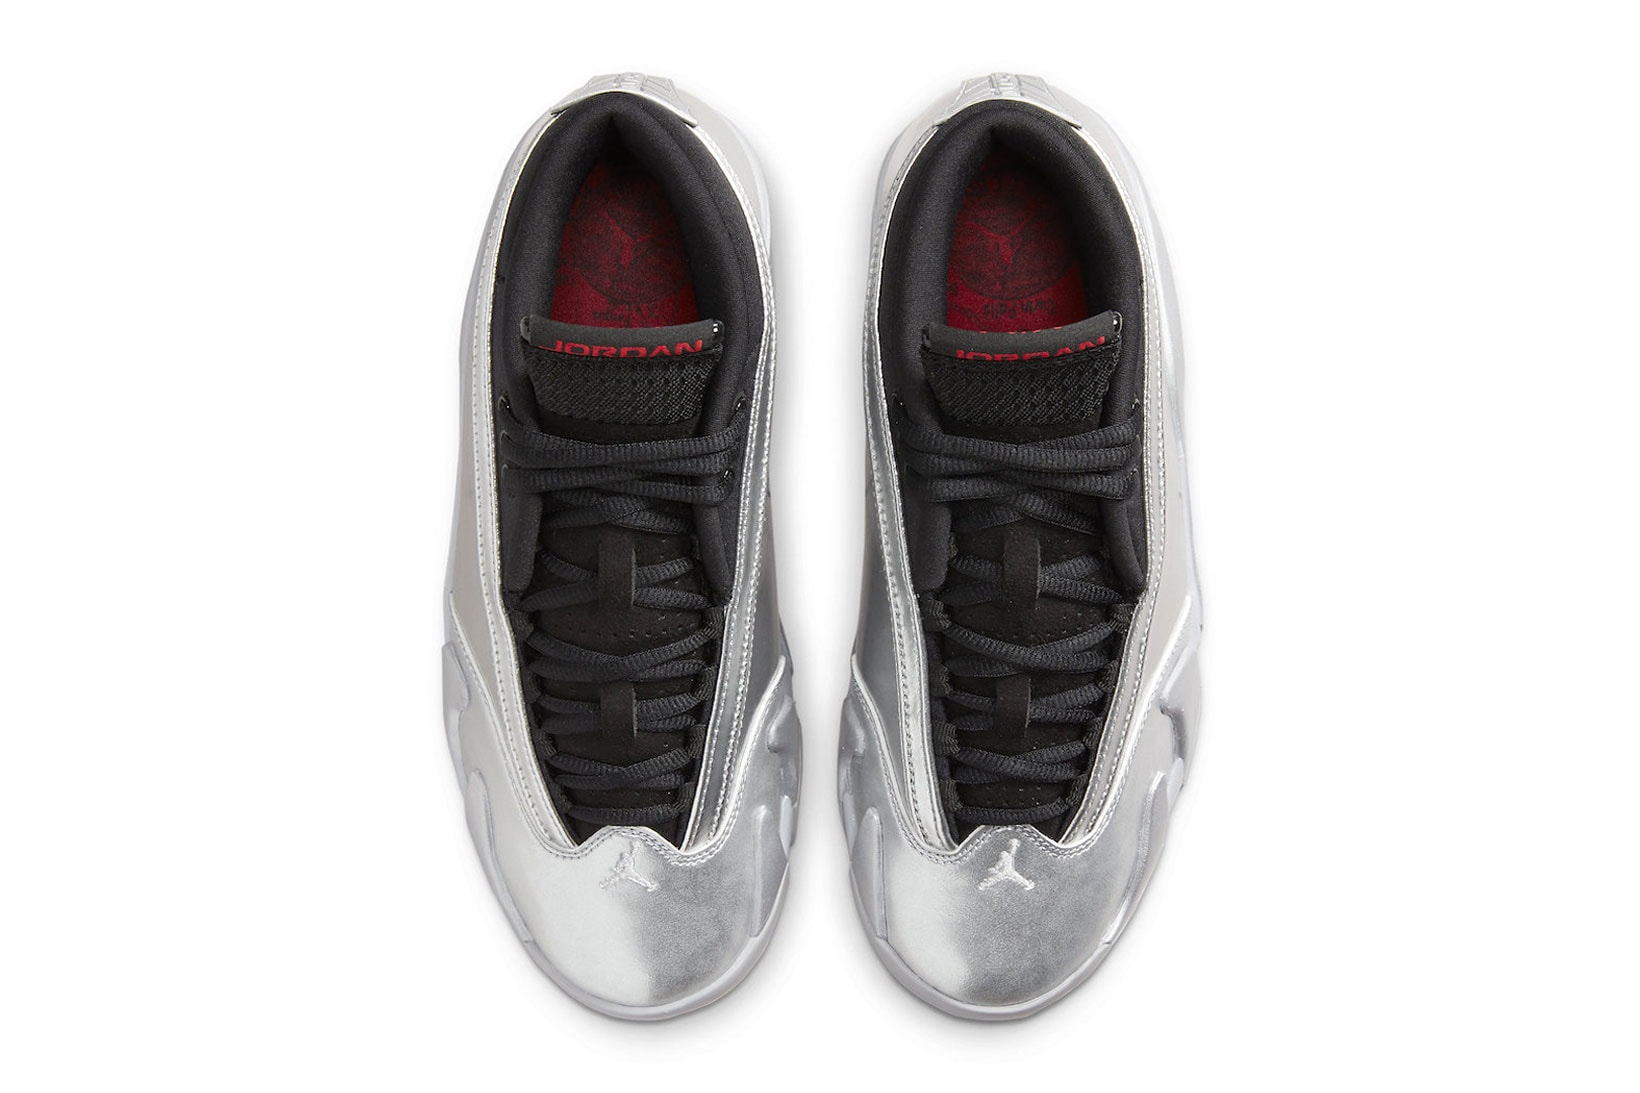 Air Jordan 14 Women's "Metallic Silver" Fire Red Wolf Grey Images Release Info